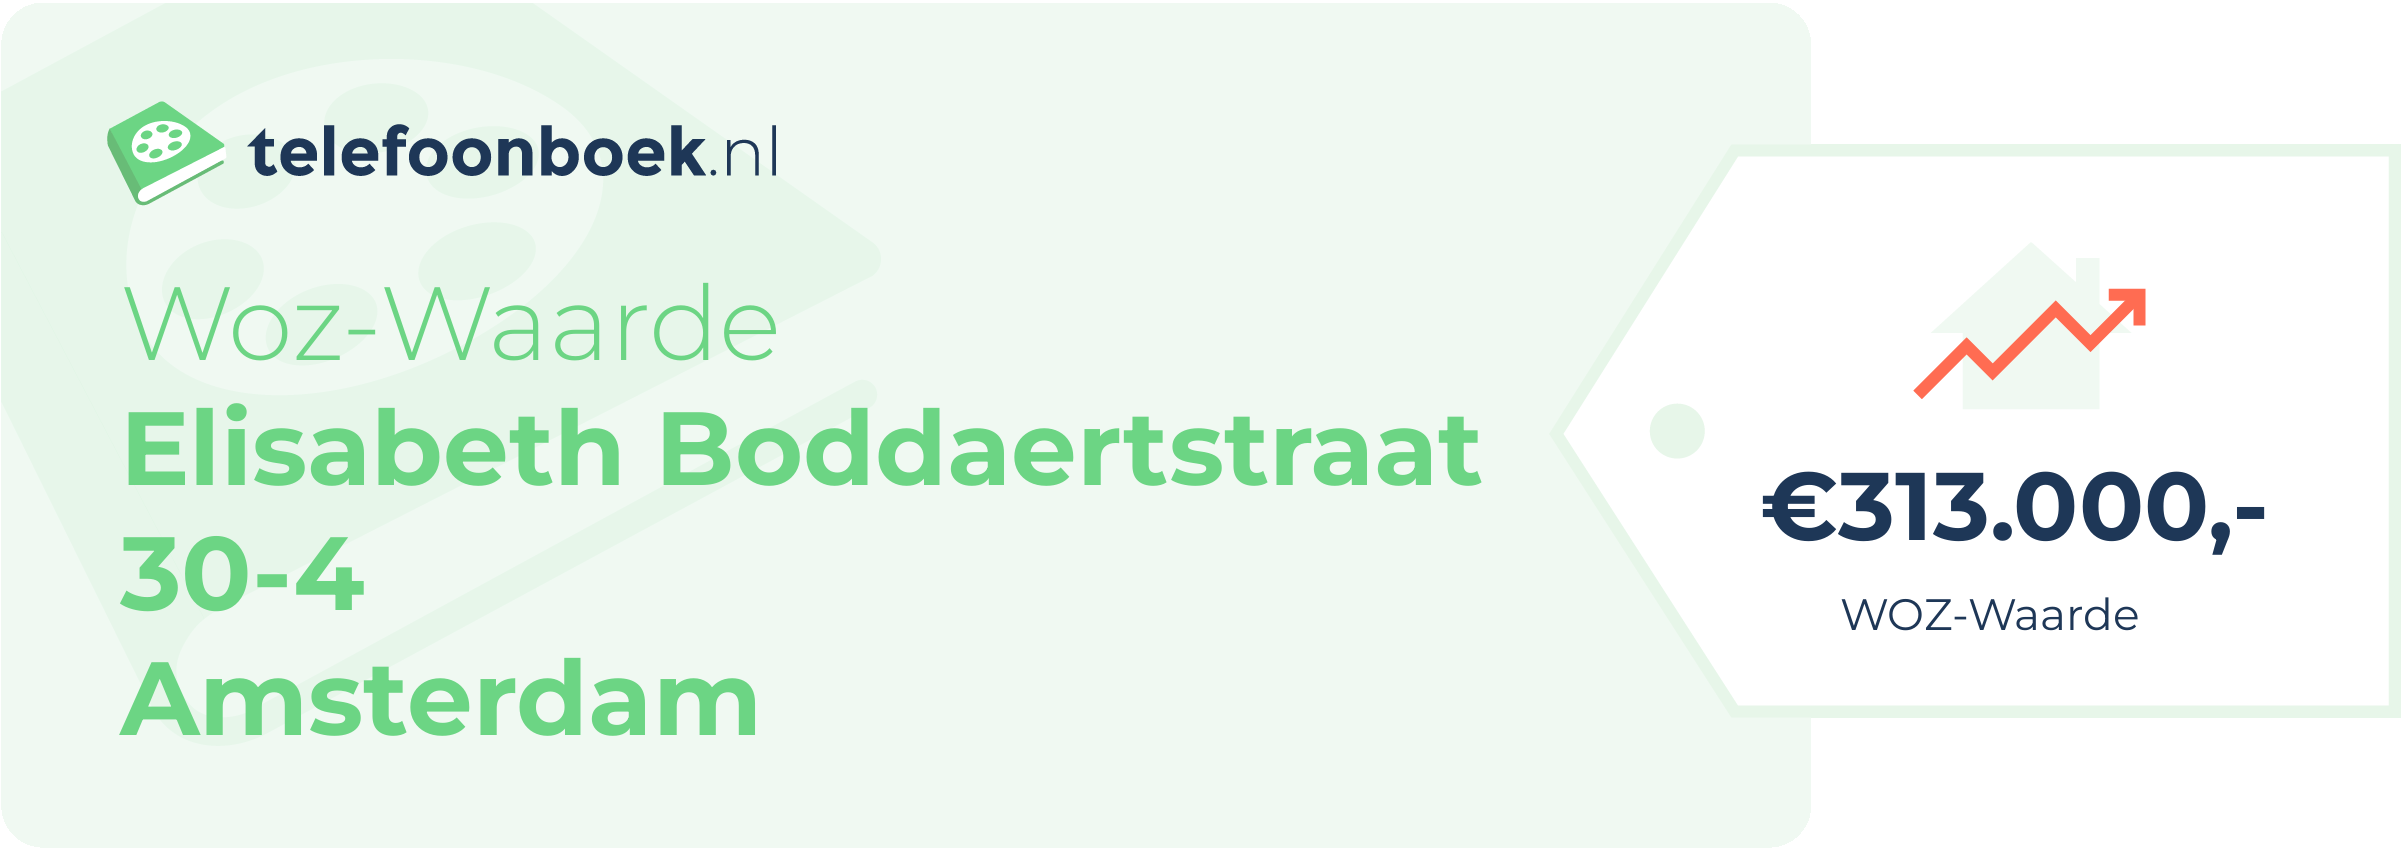 WOZ-waarde Elisabeth Boddaertstraat 30-4 Amsterdam